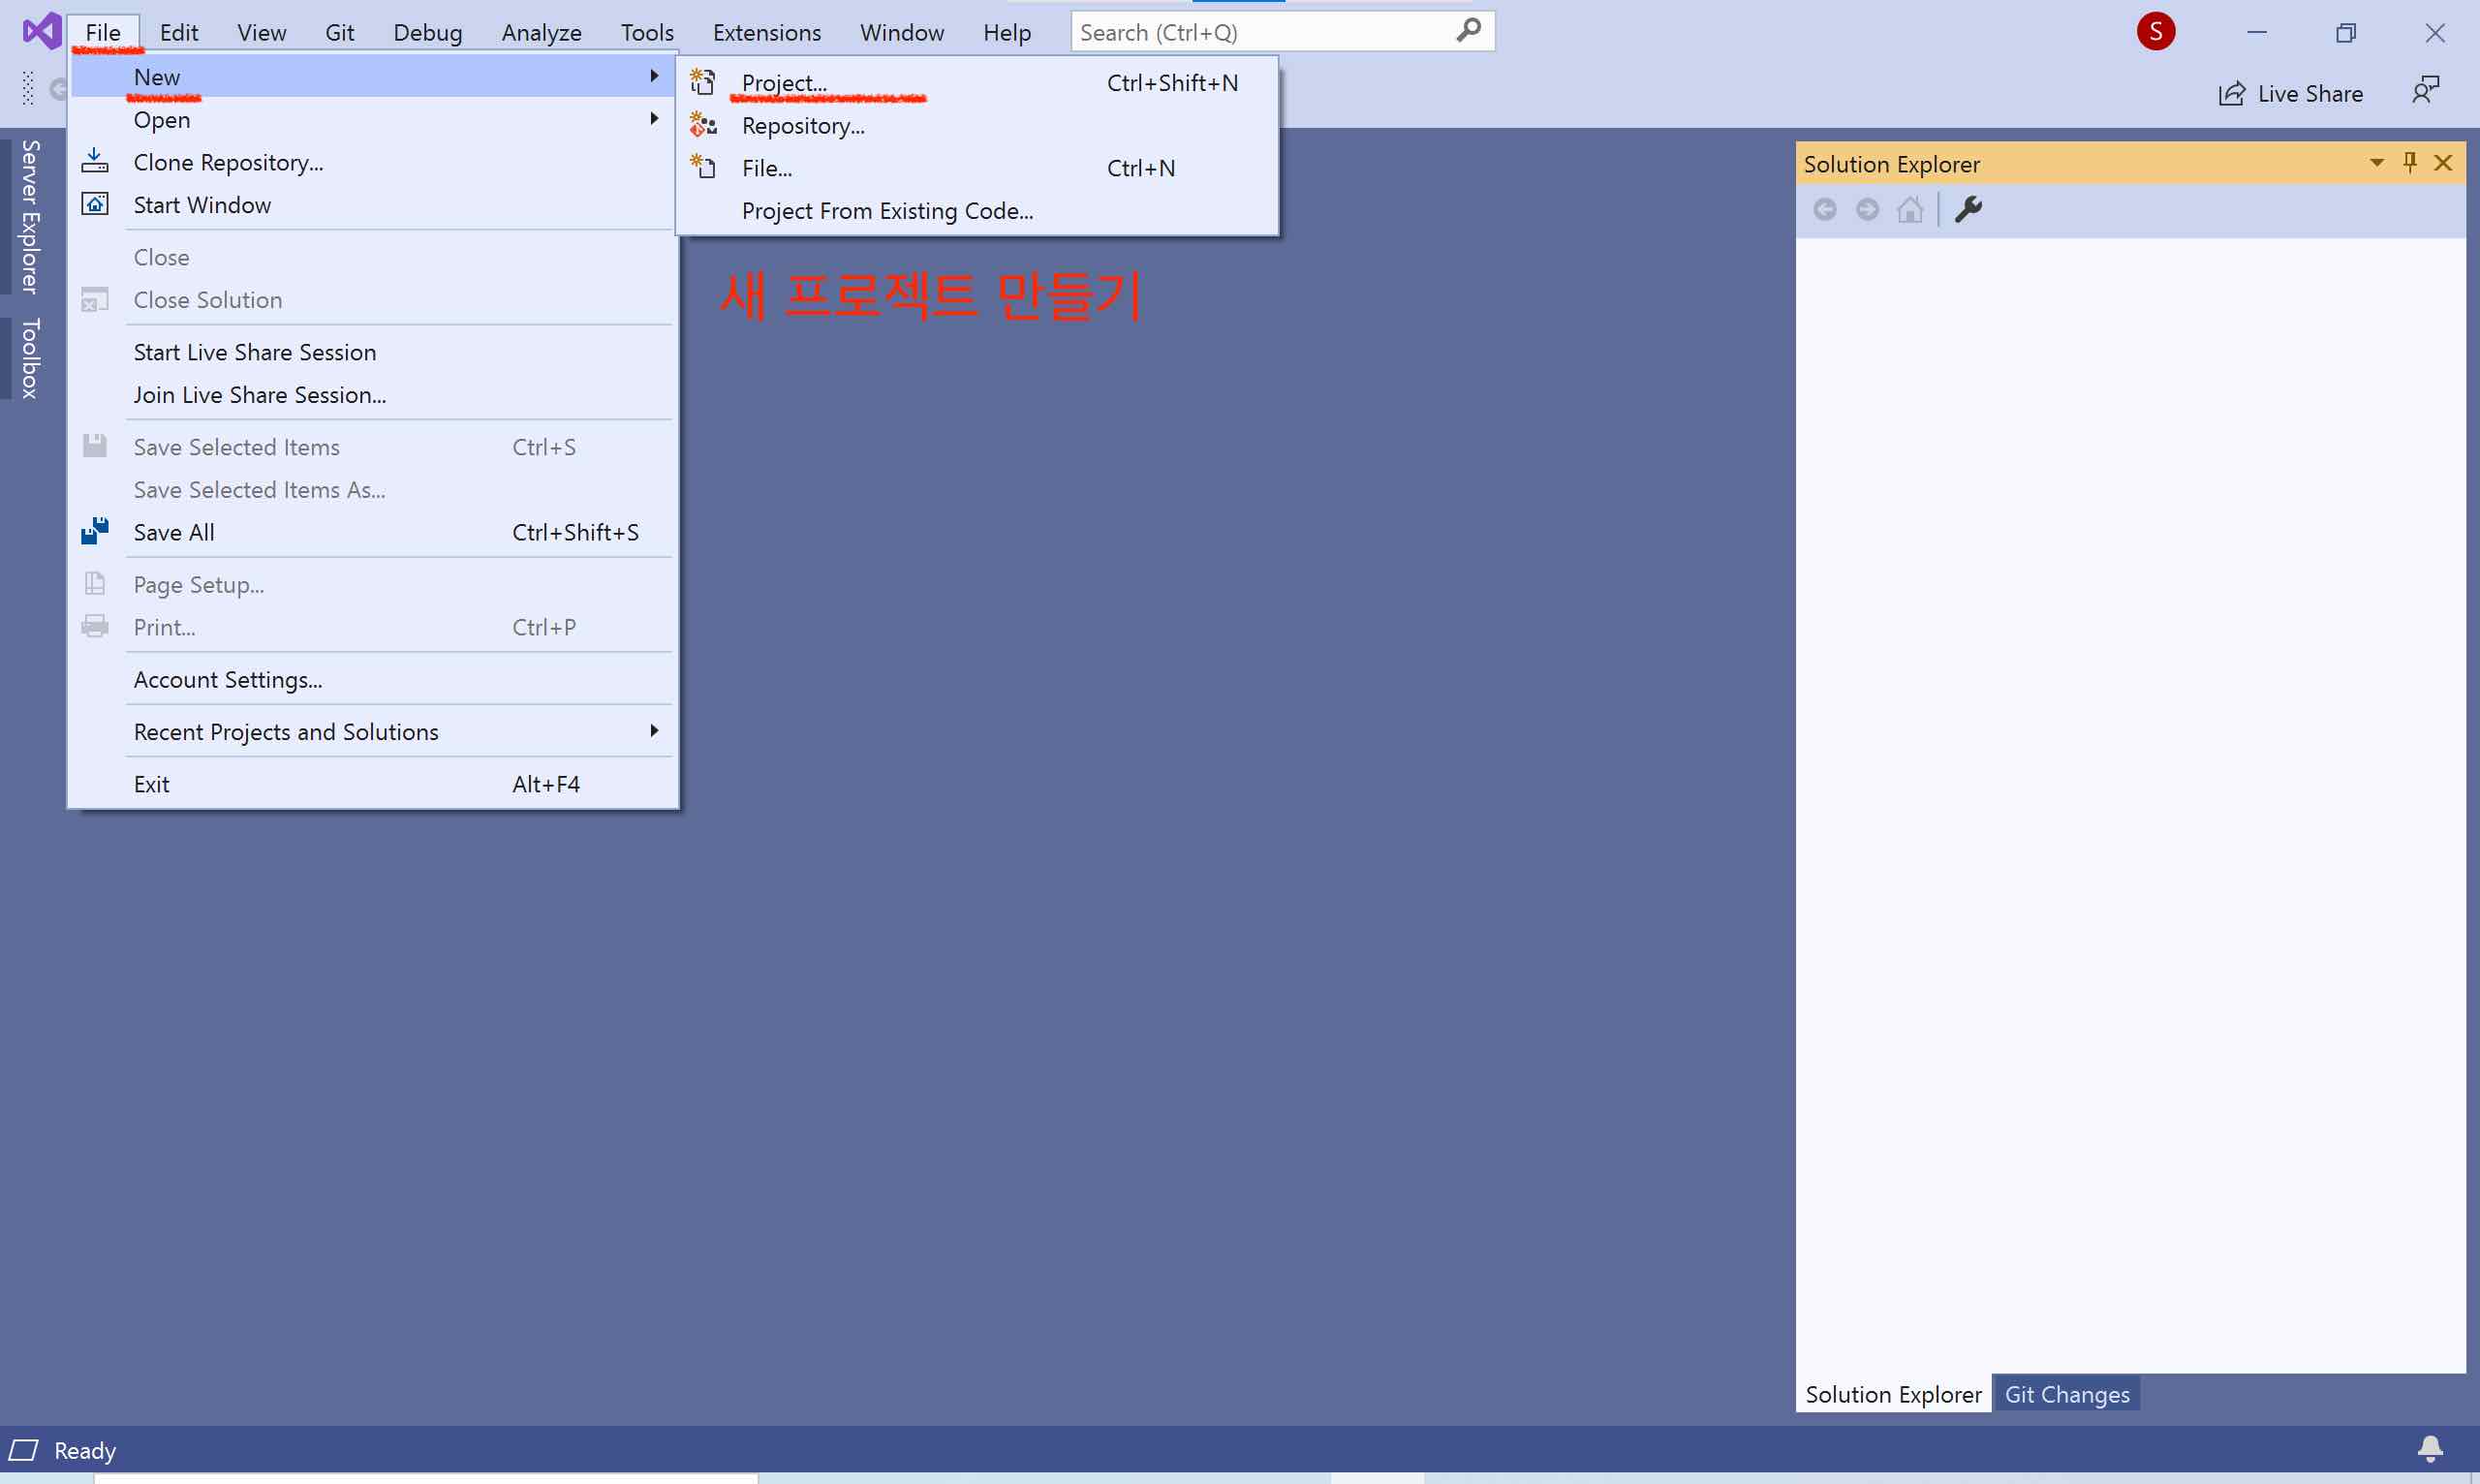 screenshot of Visual Studio Community 2019, showing the new project menu in the main screen